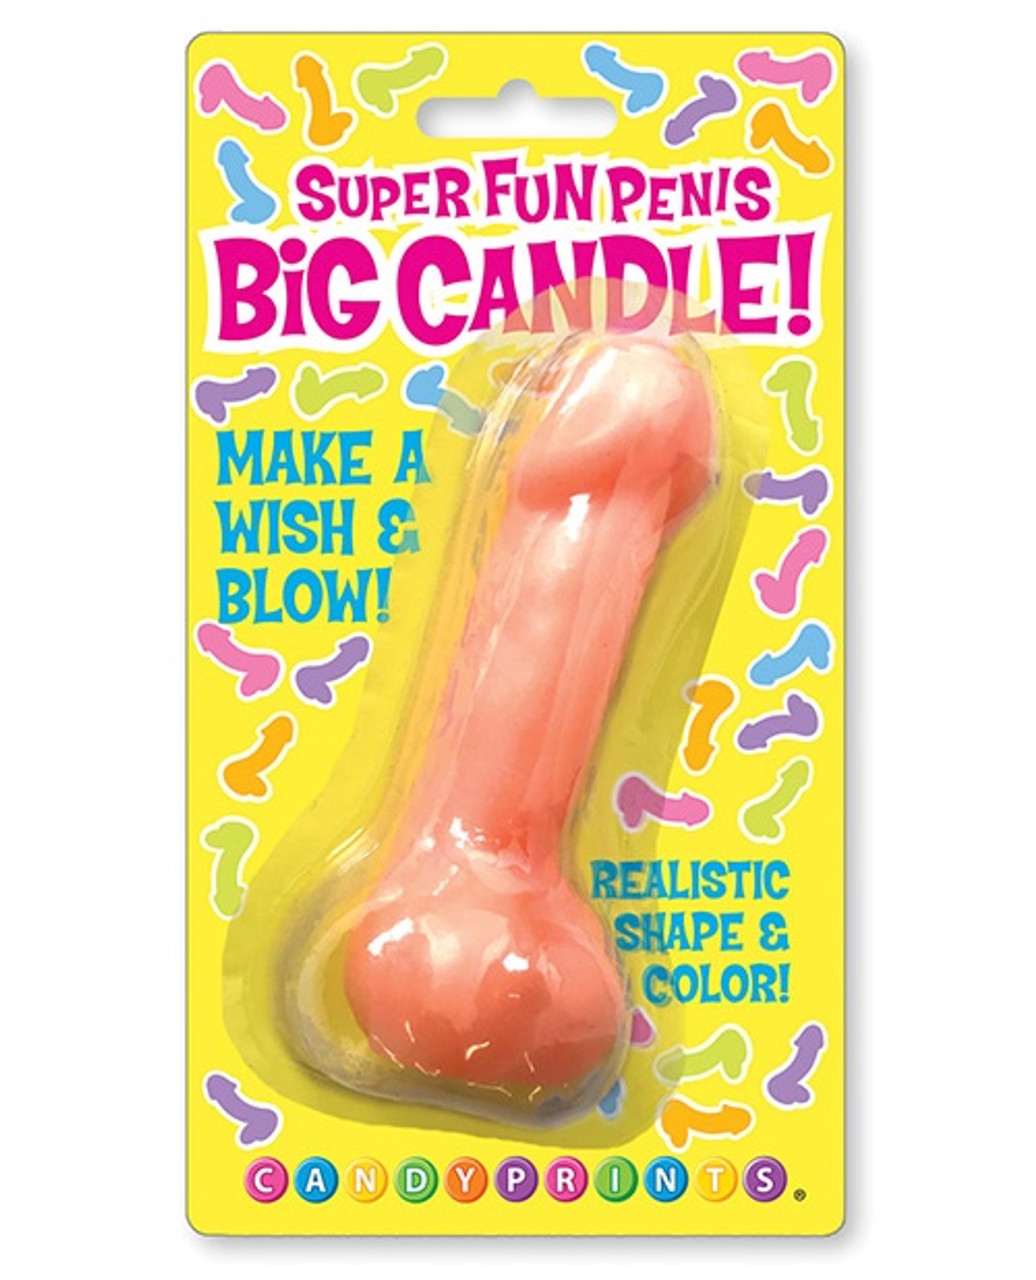 Super Fun Penis Big Candle